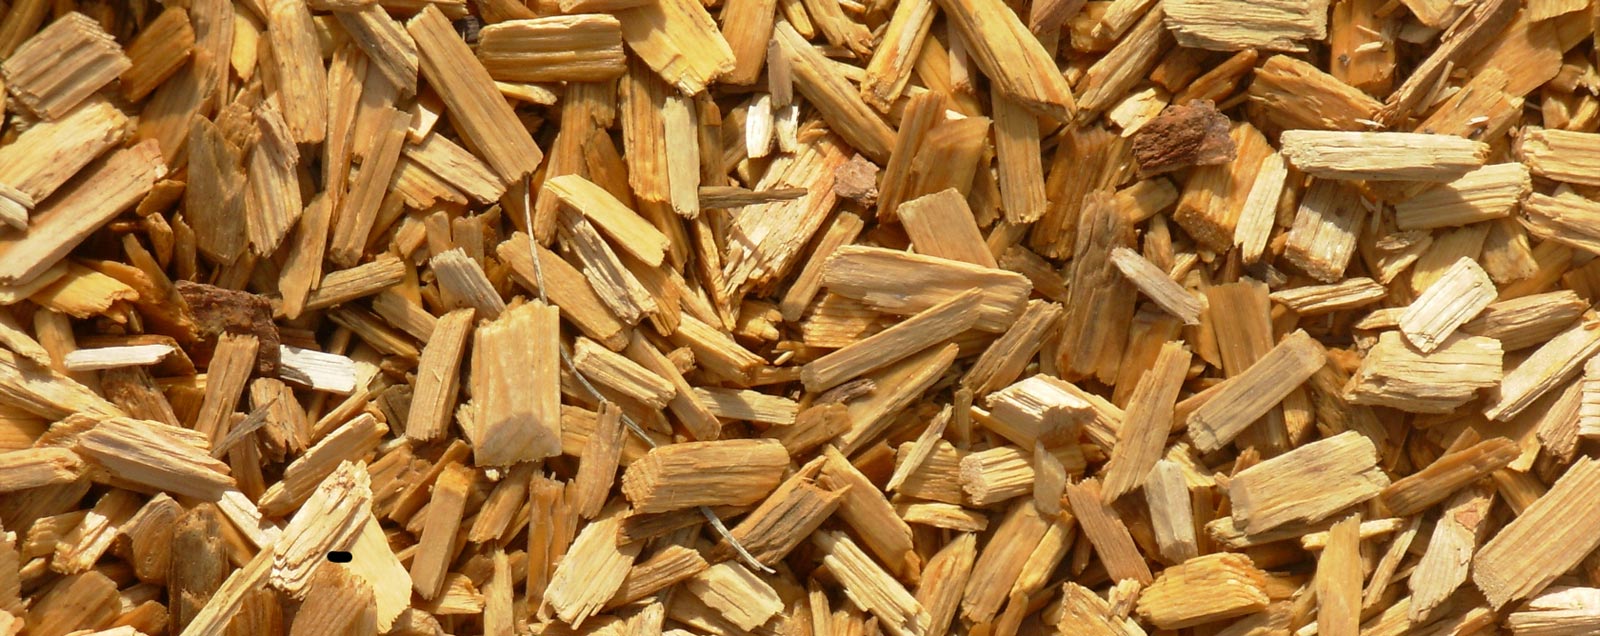 Closeup of wood chip pile